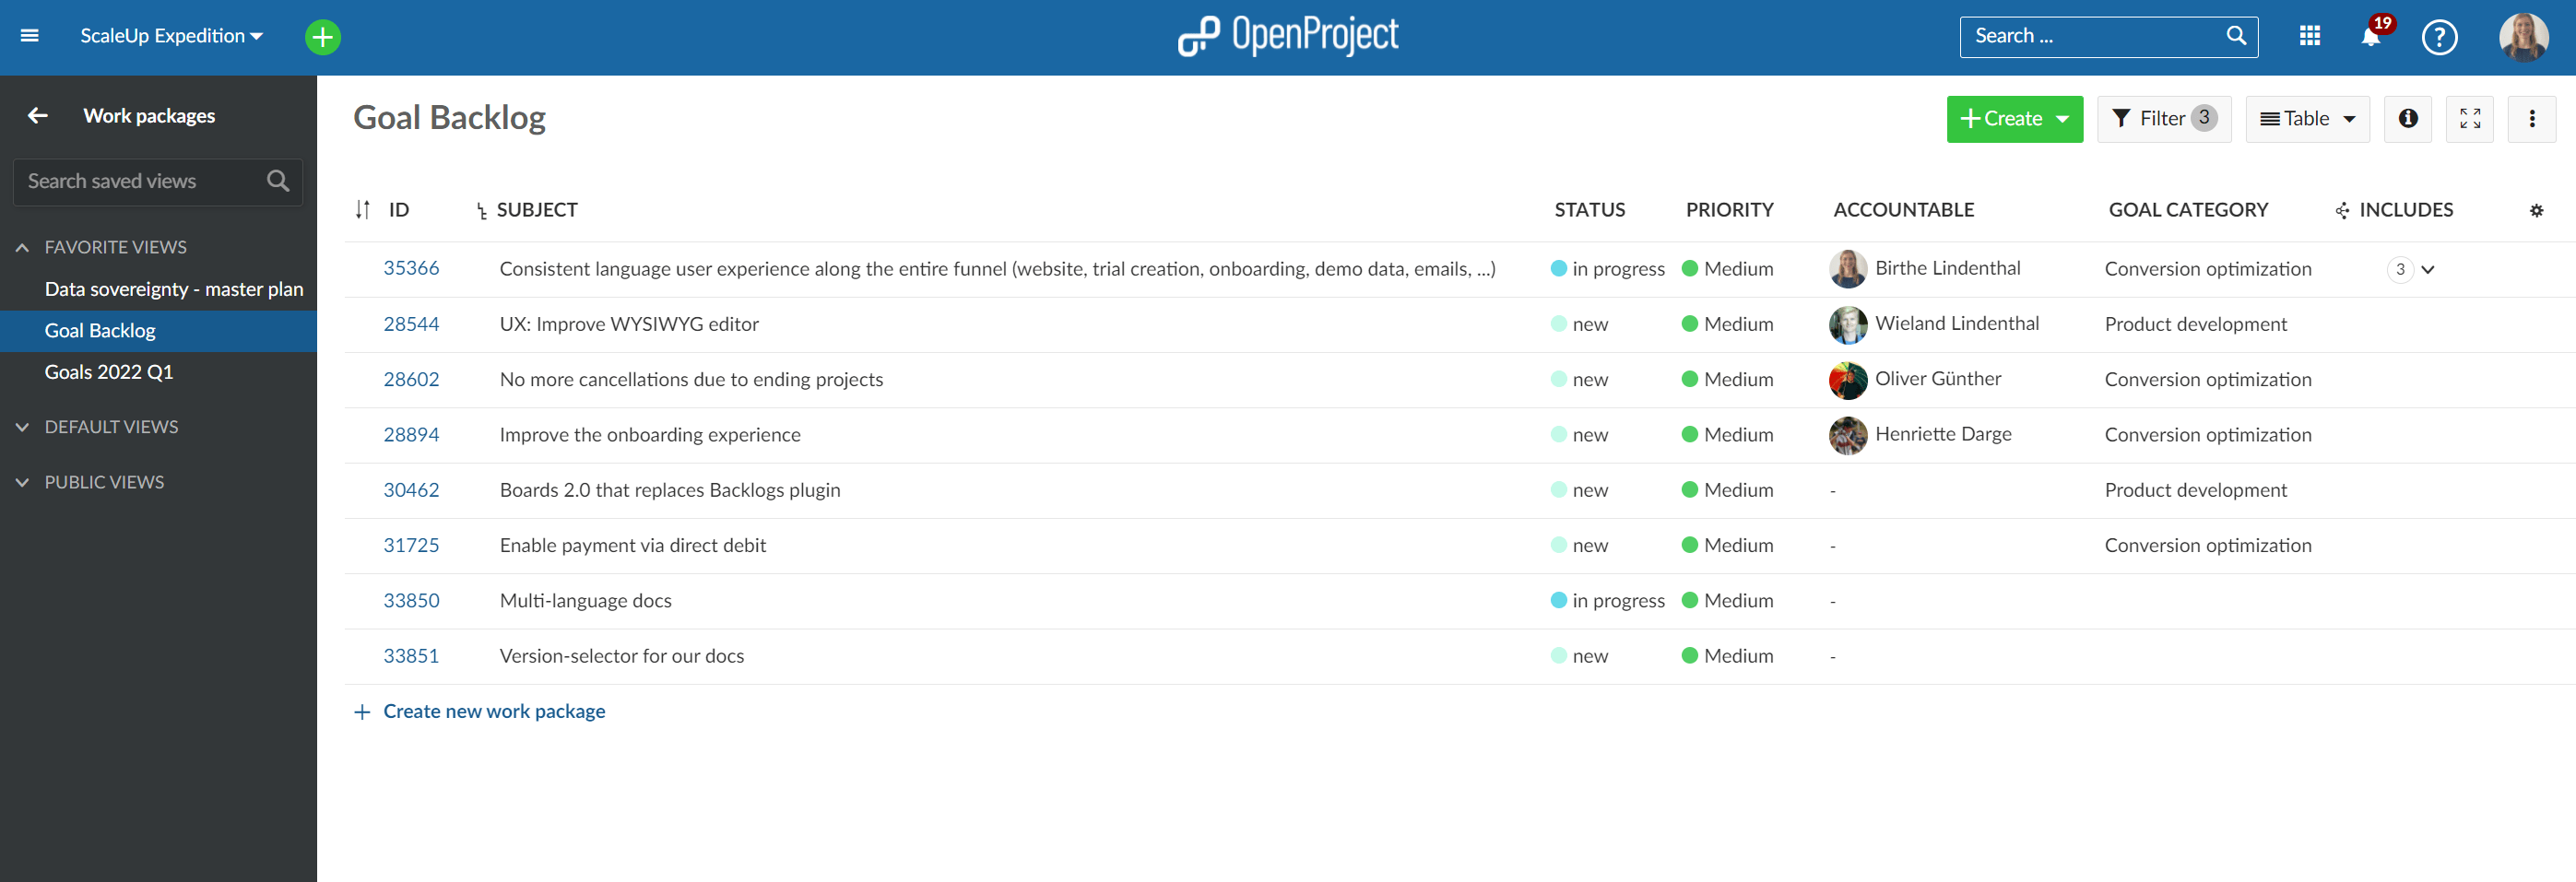 OpenProject goal backlog